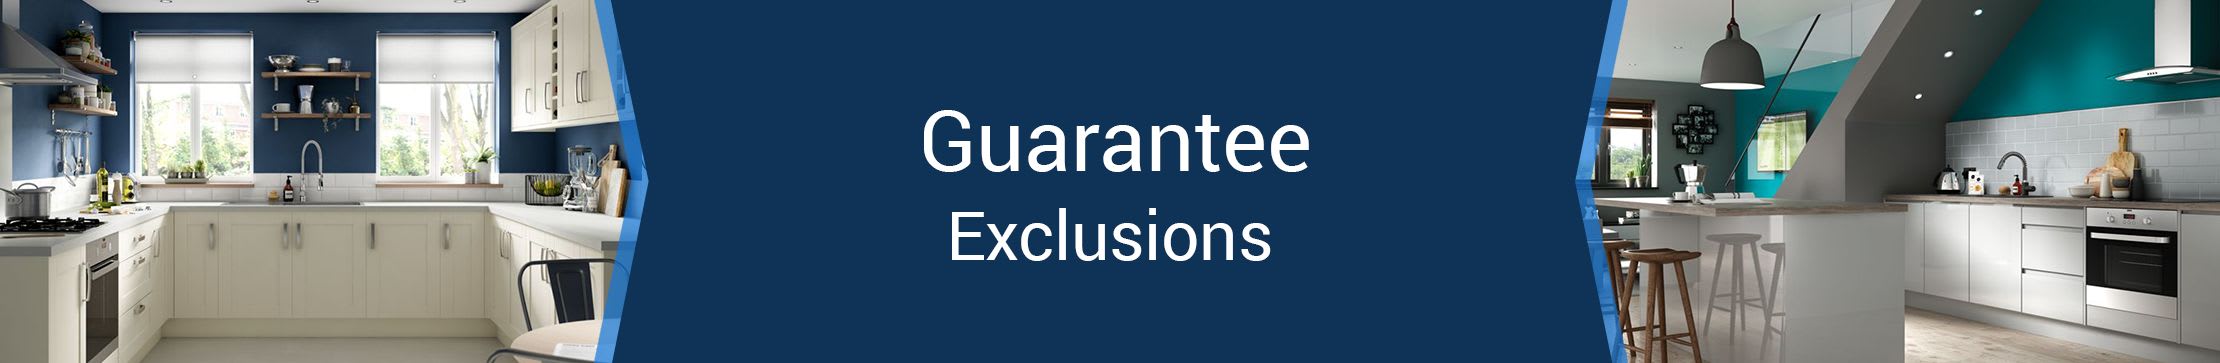 guarantee exclusions